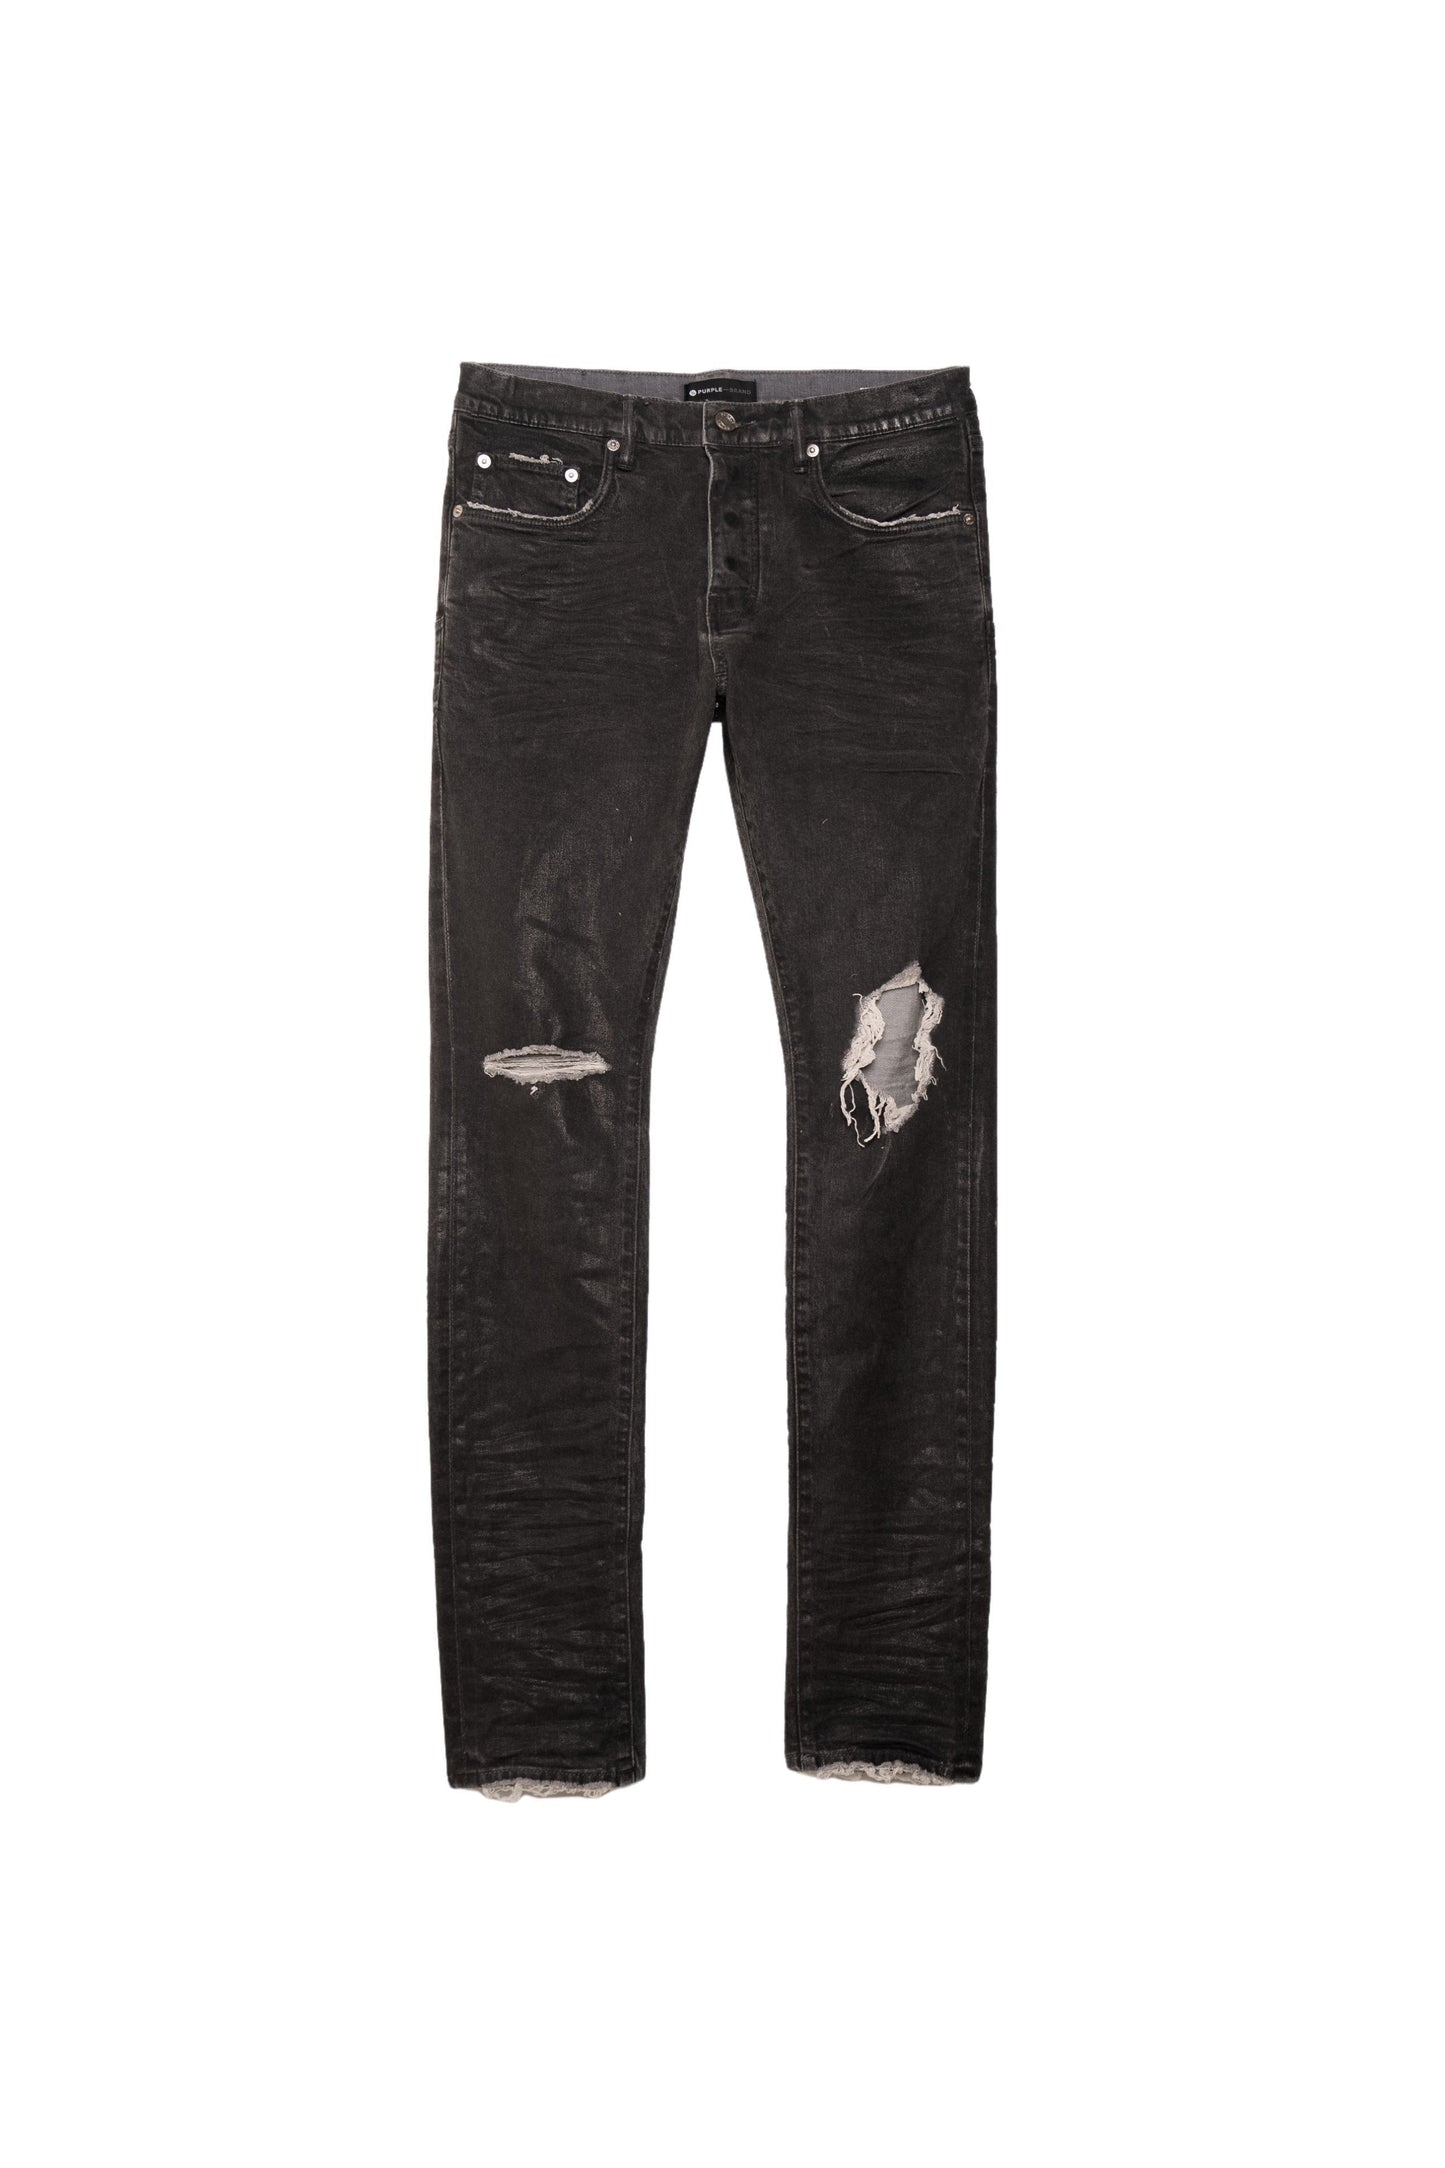 PURPLE BRAND - Men's Denim Jean - Low Rise Skinny - Style No. P001 - Grey Wax Coated - Front